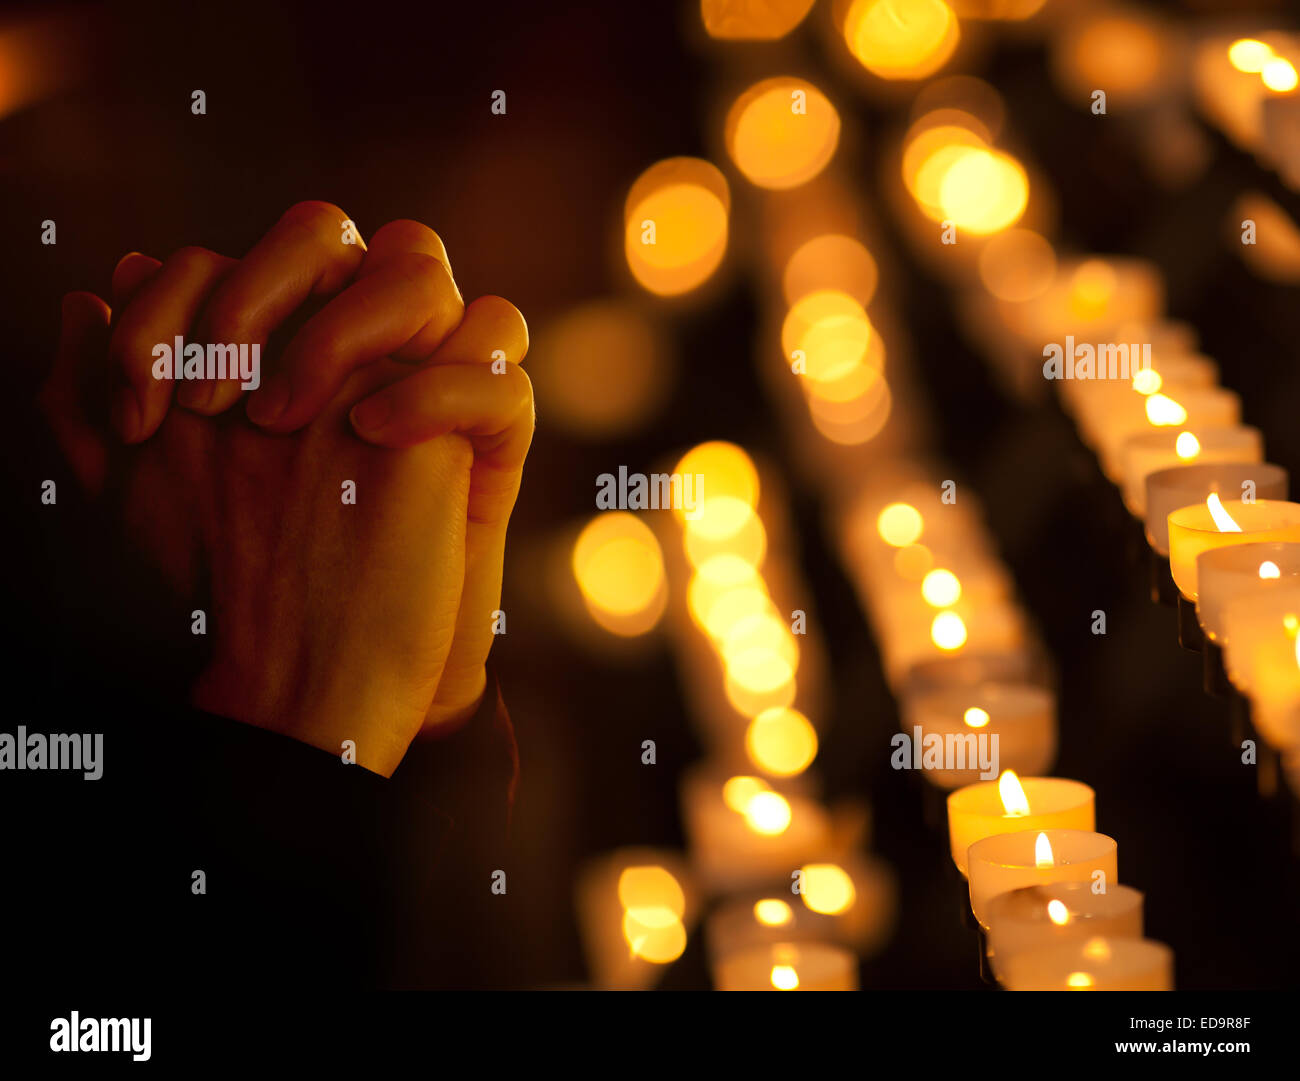 Praying in catholic church. Religion concept. Stock Photo